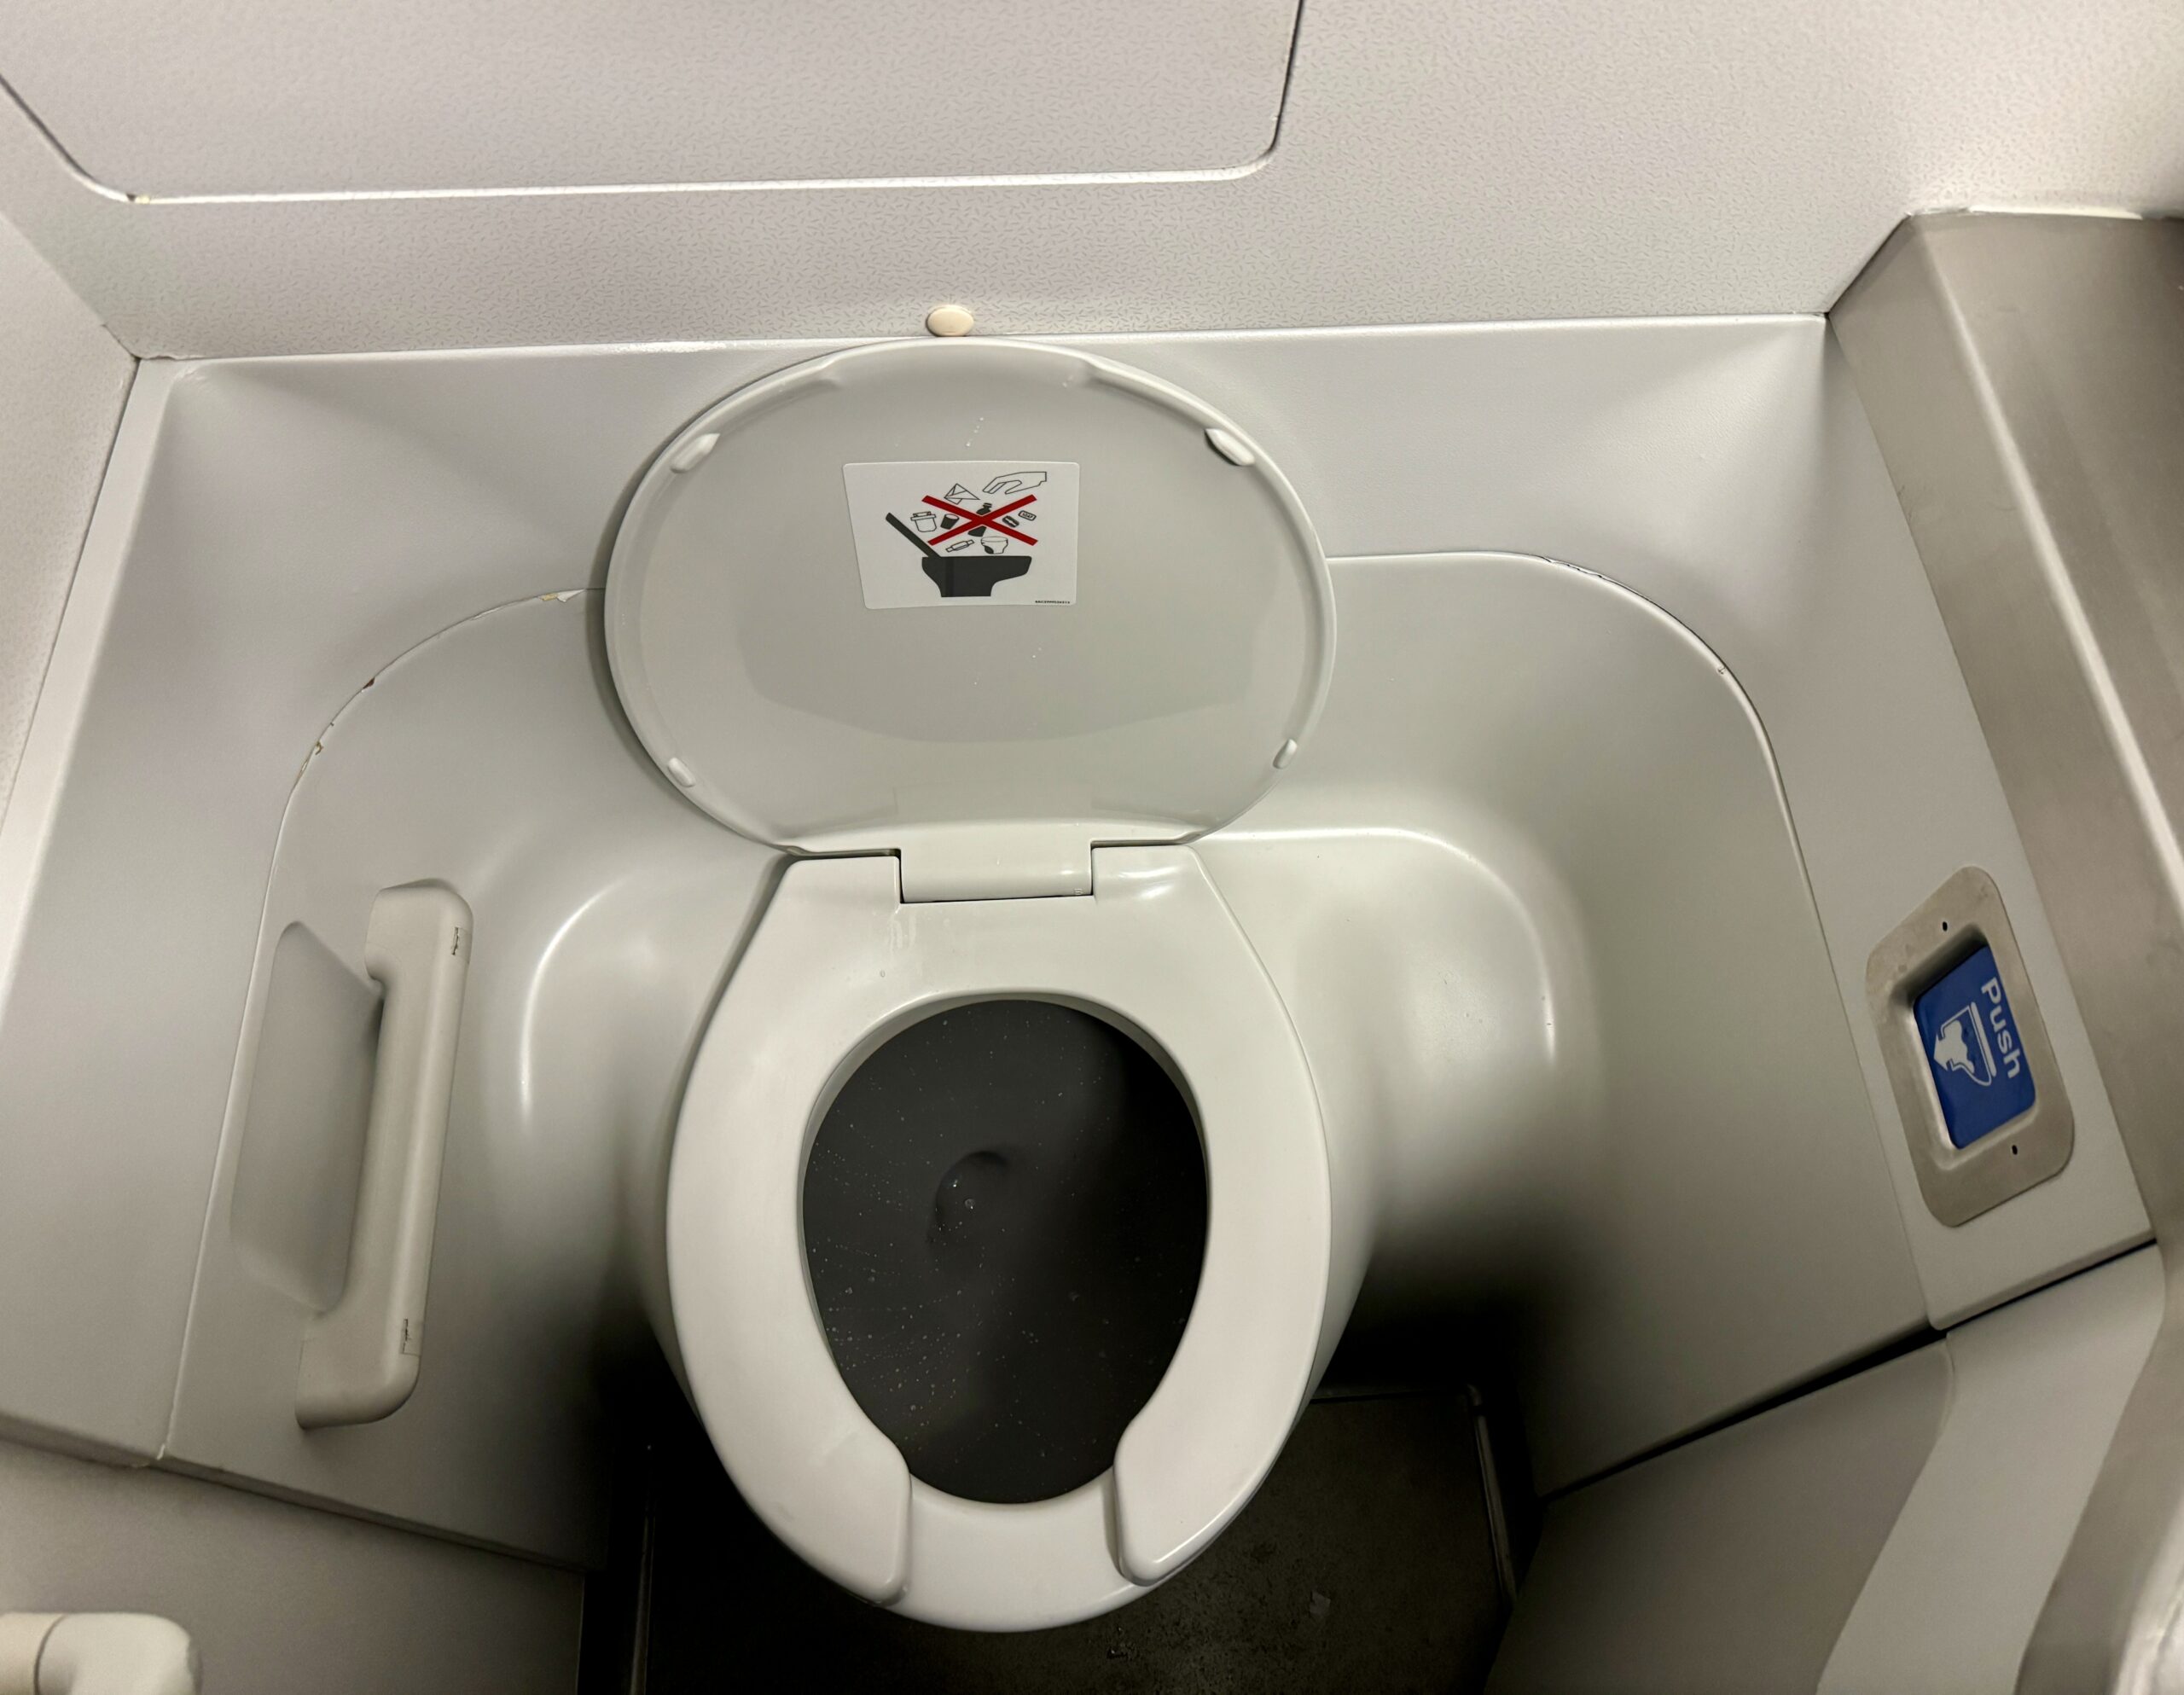 WestJet Toilet